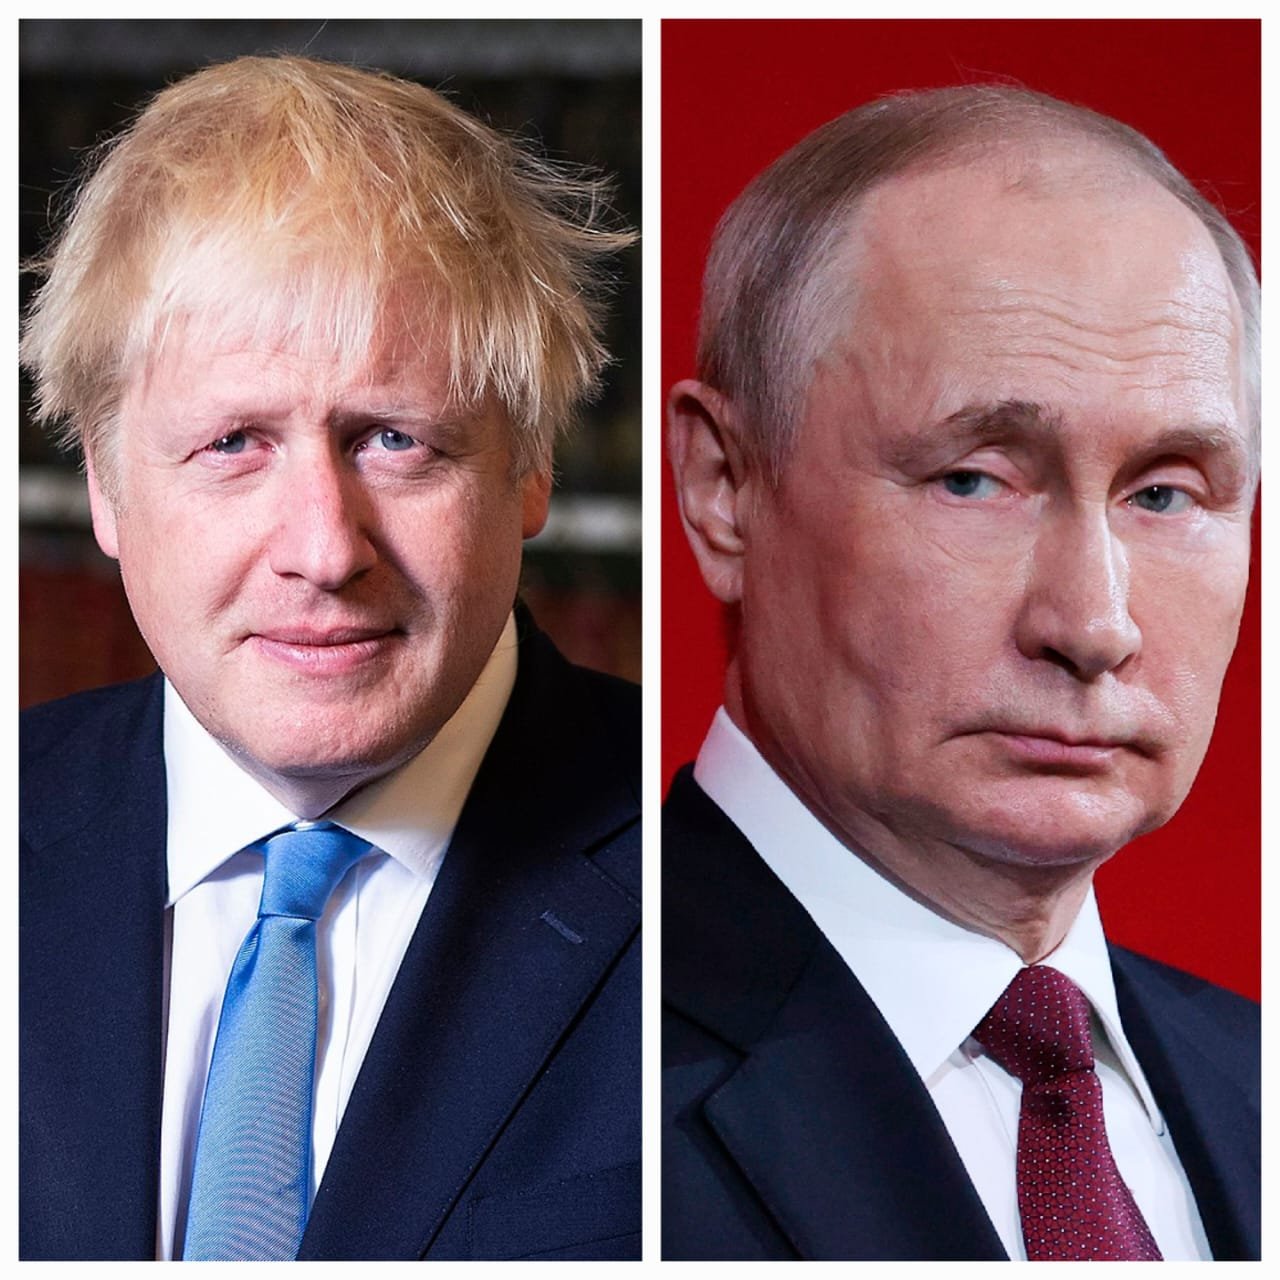 Boris Johnson claims Vladimir Putin threatened to kill him with a missile